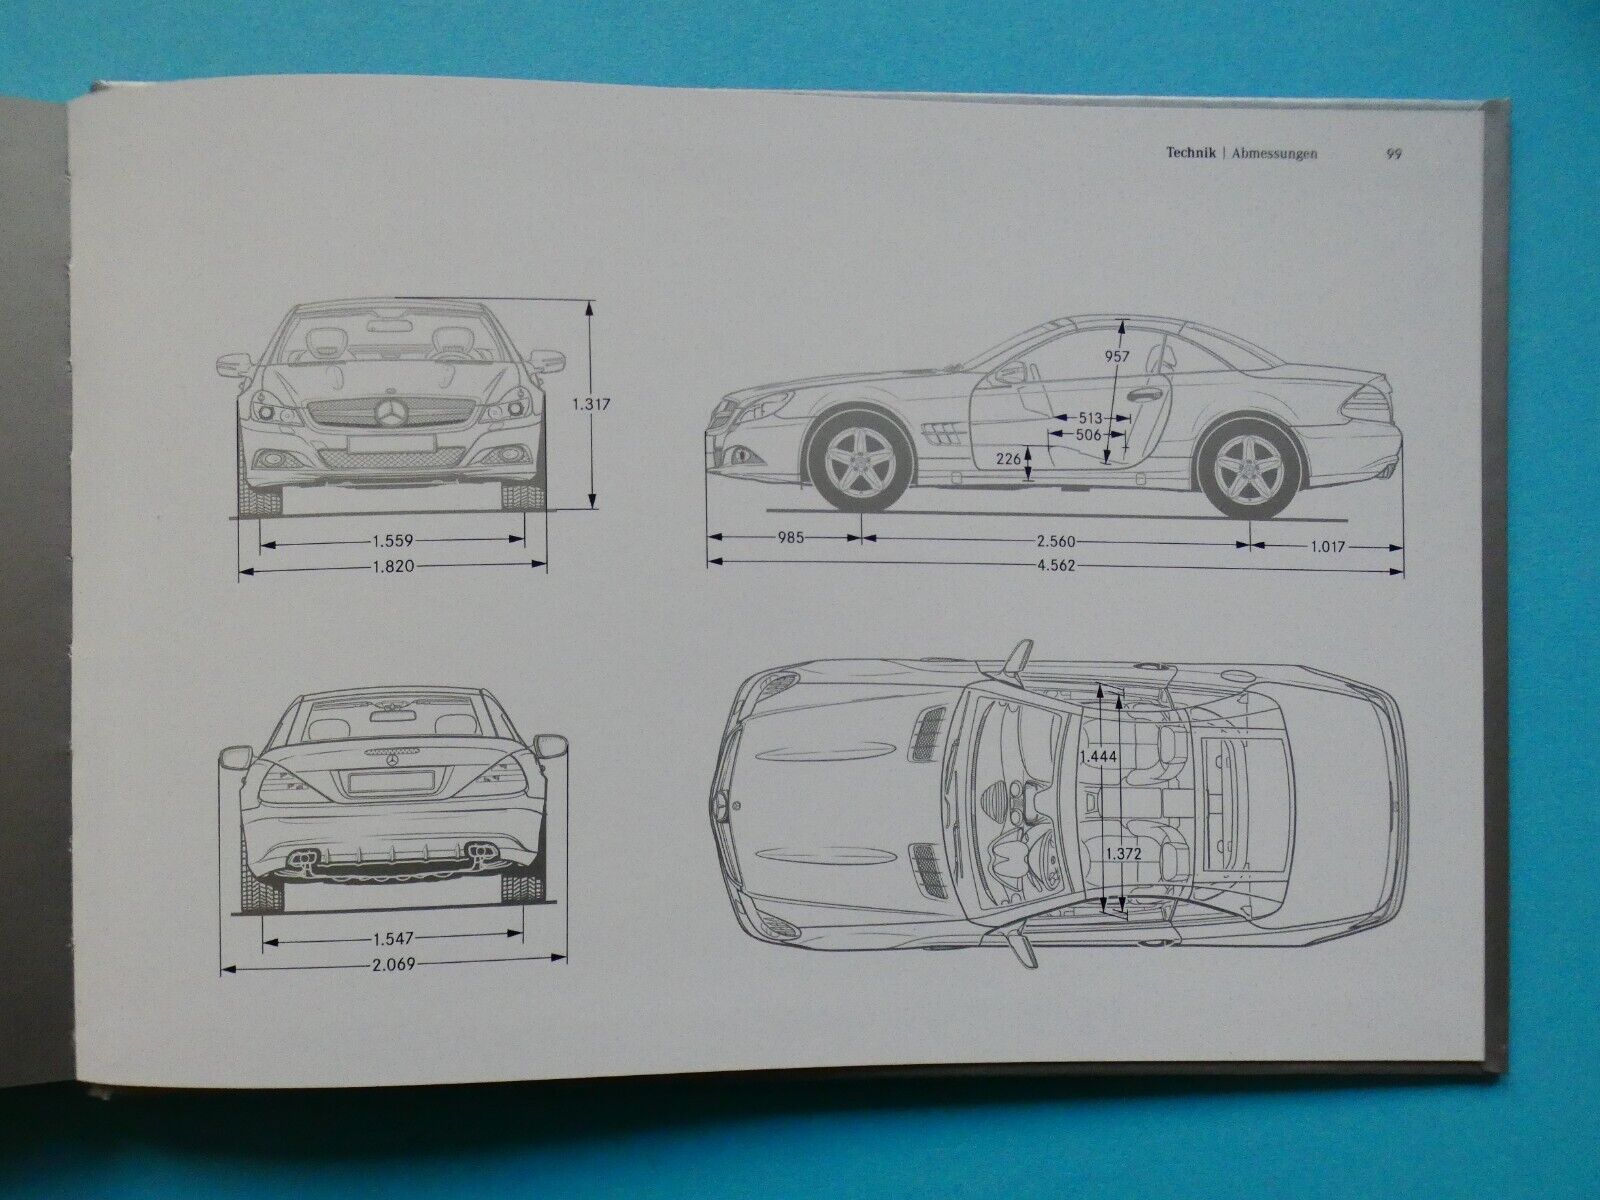 Prospekt / Buch / Katalog / Brochure - Mercedes R230 SL mit 63 / 65 AMG - 11/07